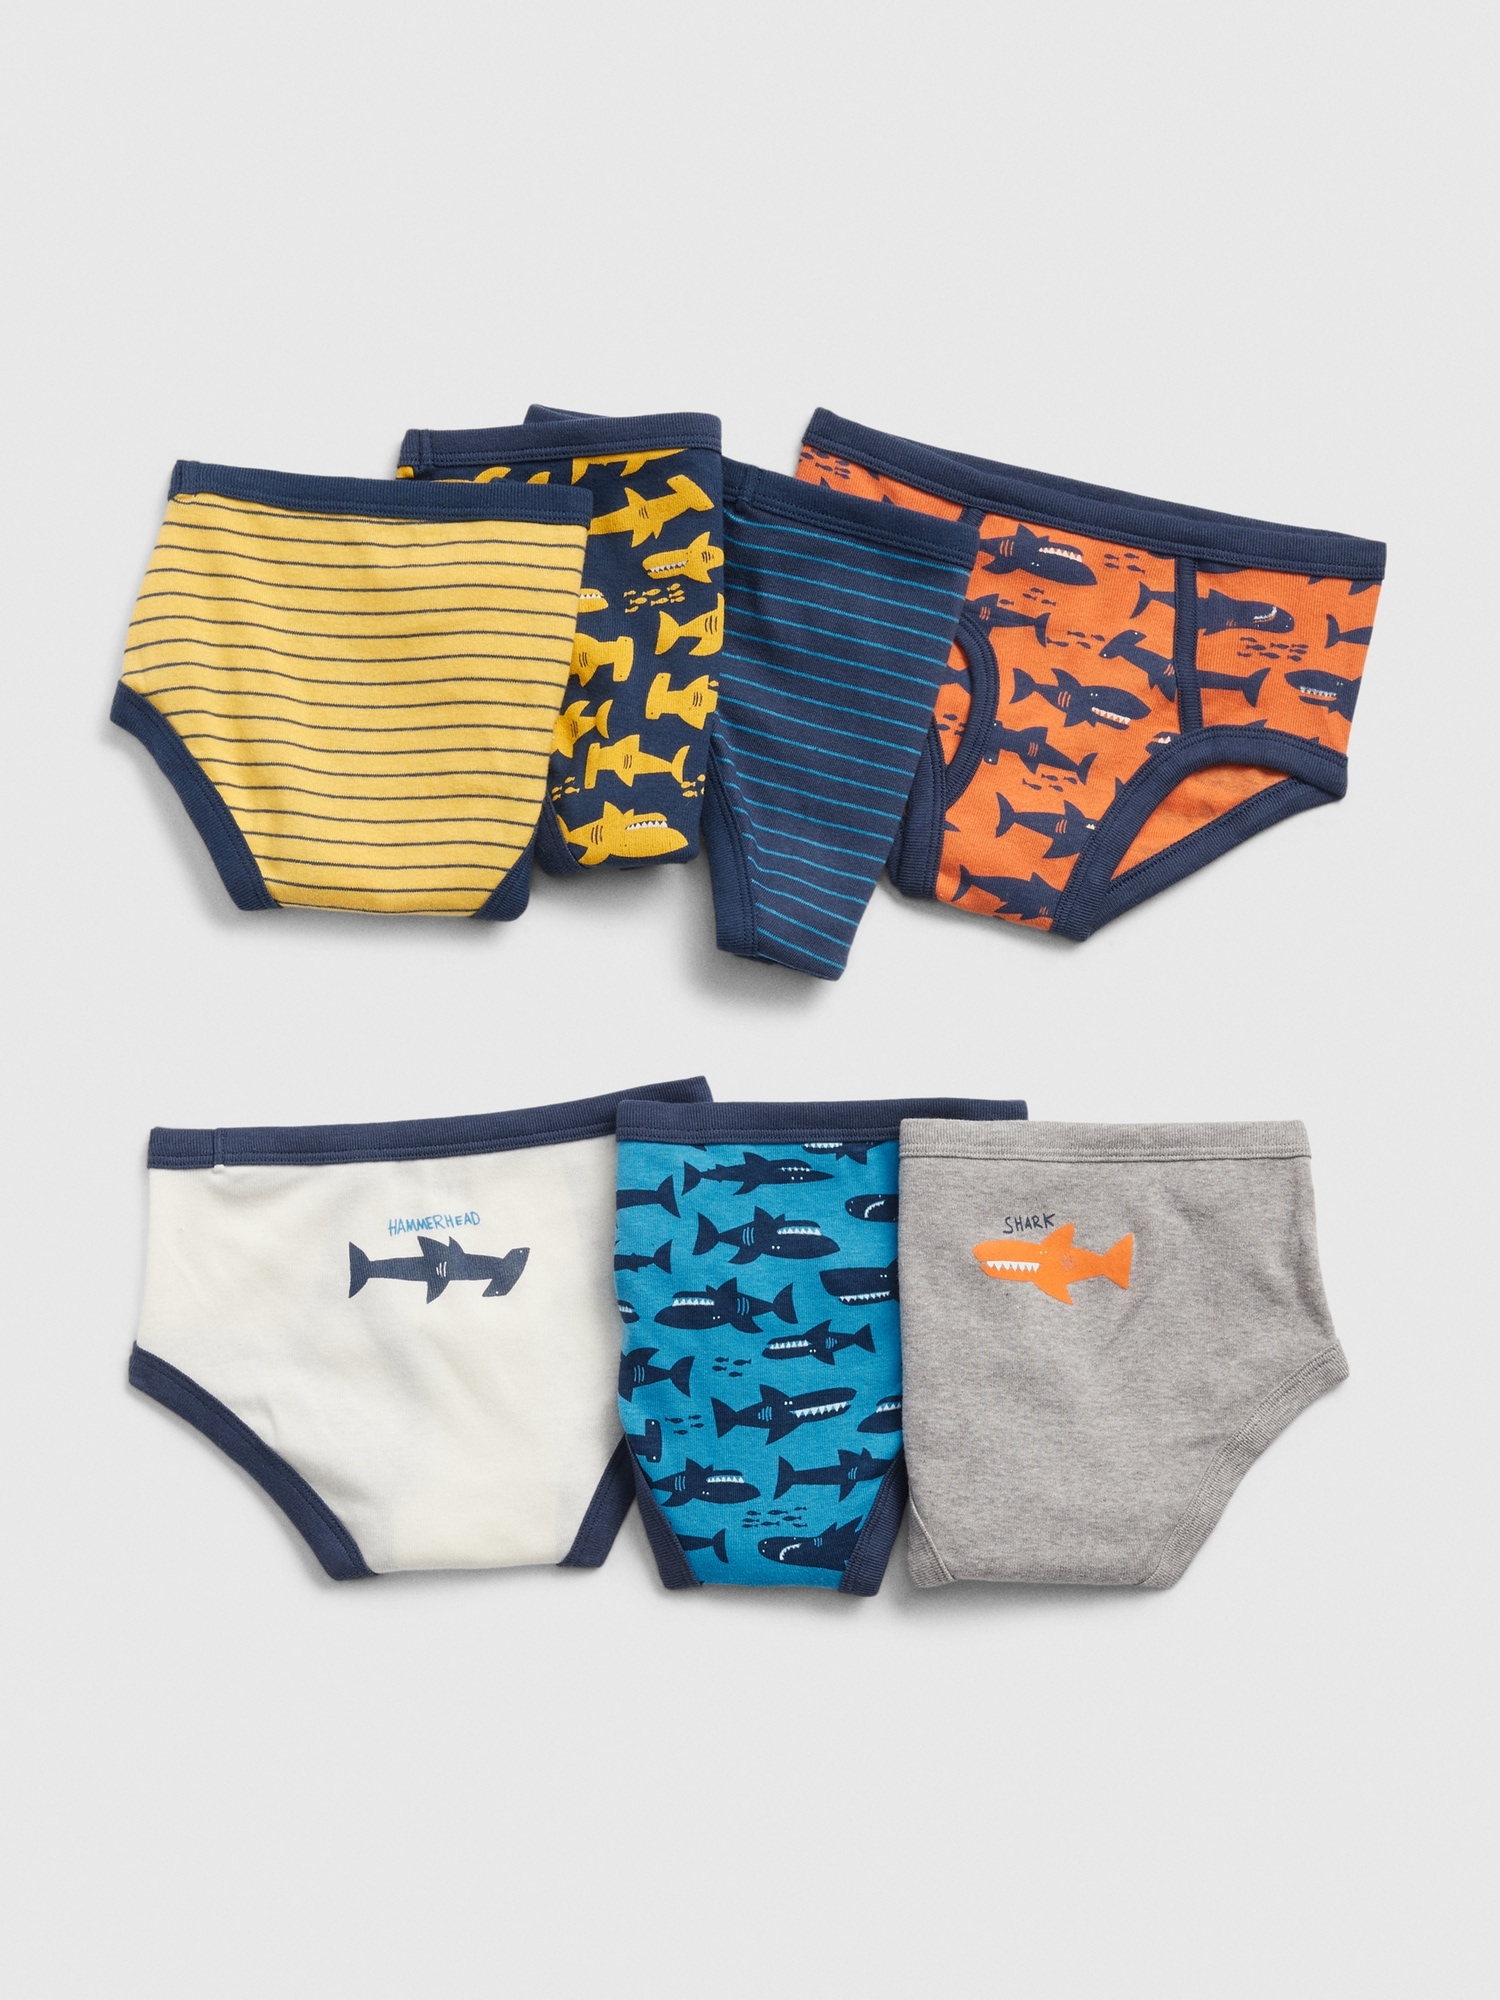 Toddler Boys Baby Shark Underwear Size 2T 3T or 4T Briefs 100% Cotton (7  Pack) 